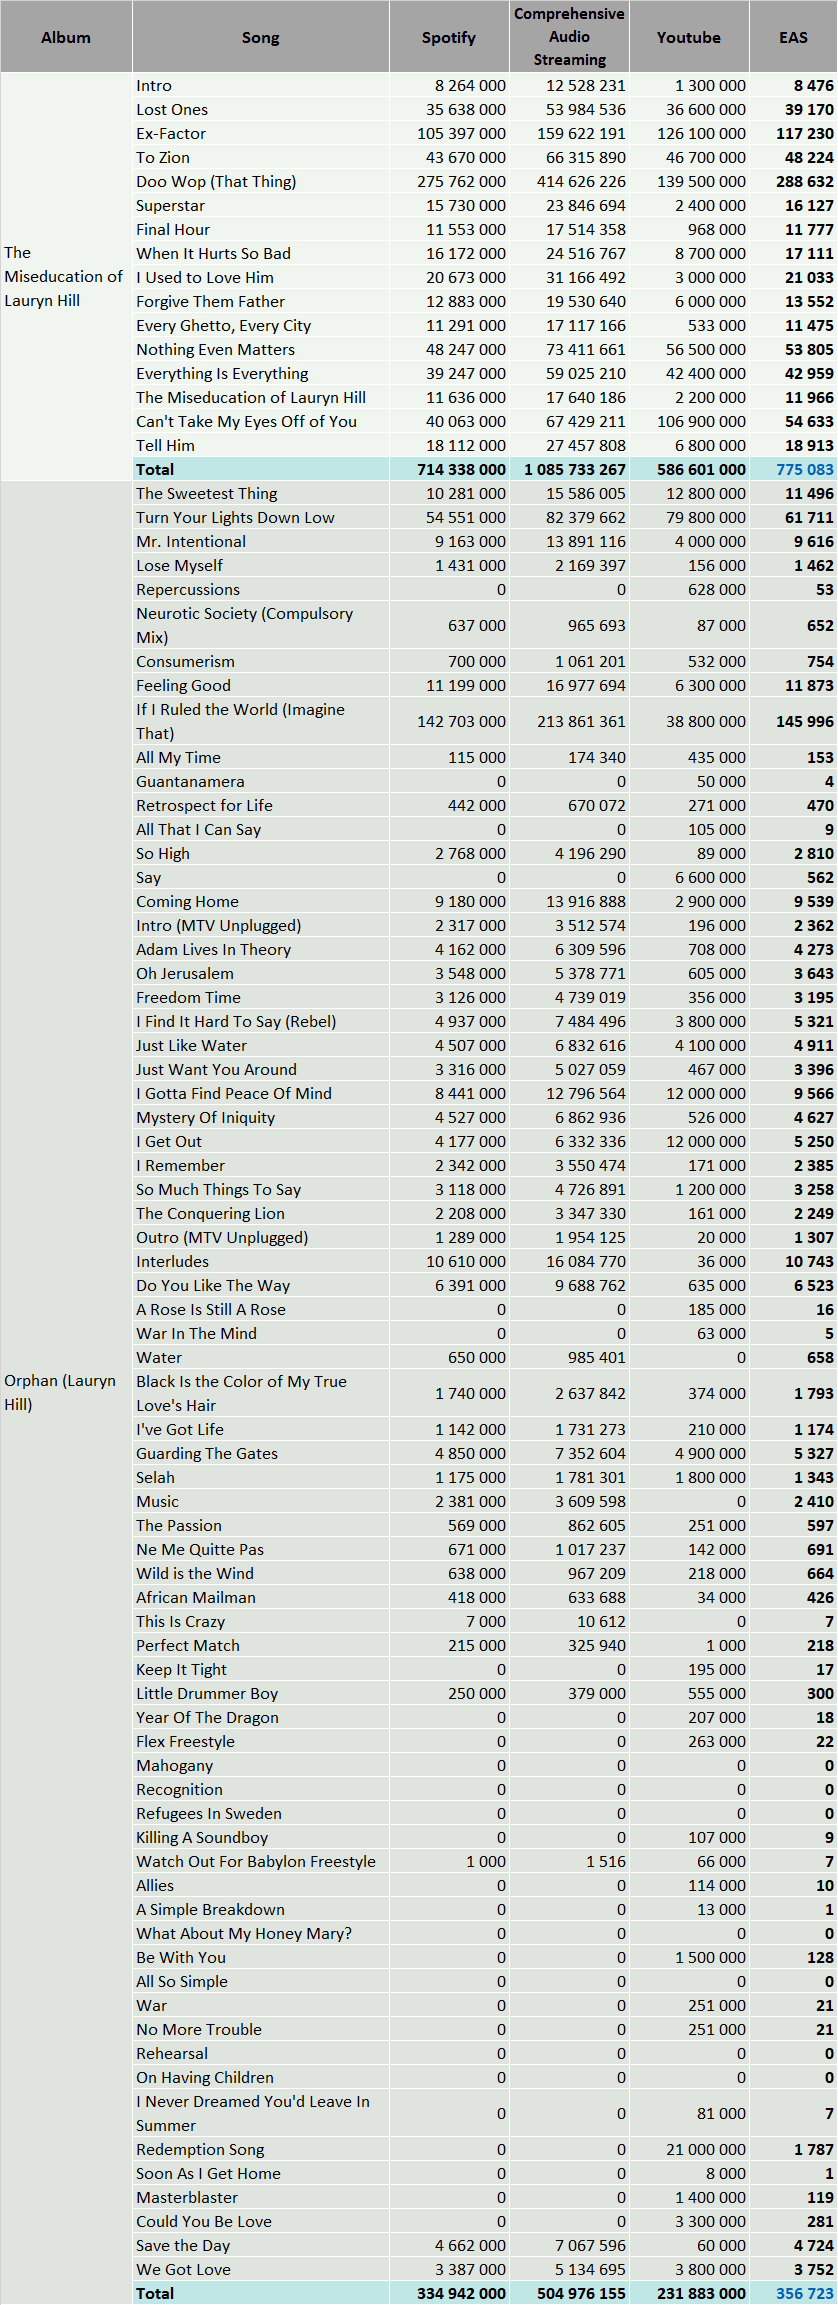 CSPC Lauryn Hill discography streaming statistics